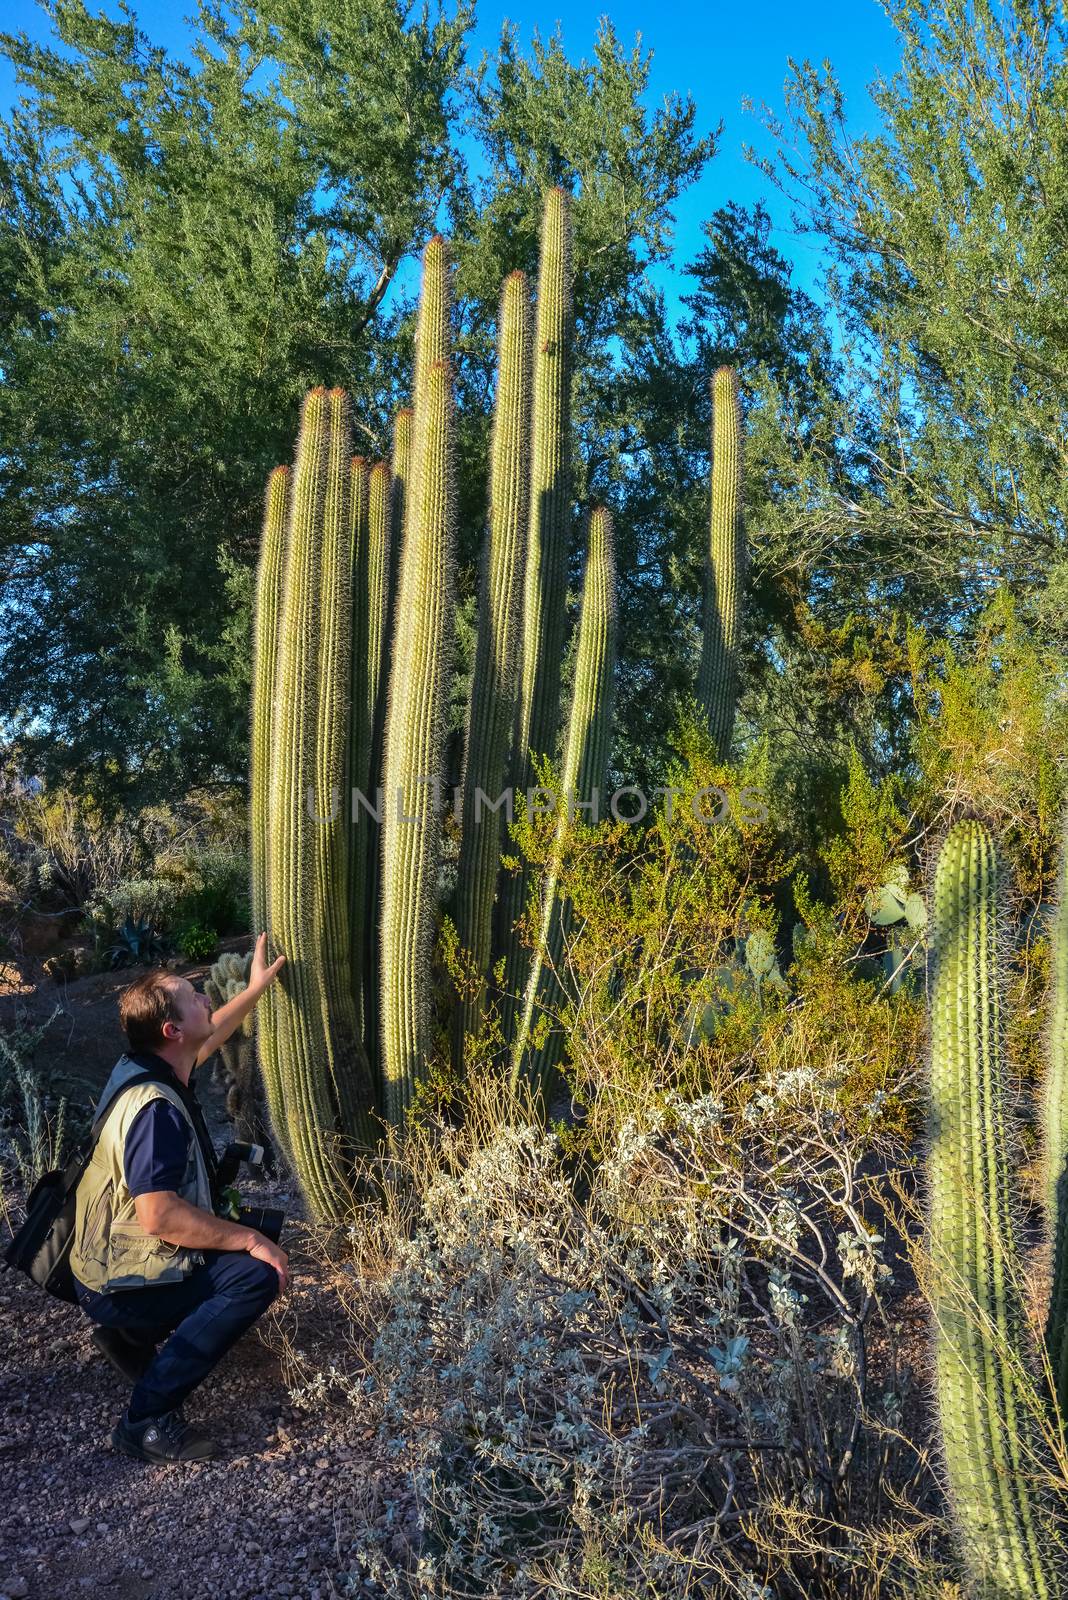 Tourist examines a large cactus in the Phoenix Botanical Garden, Arizona